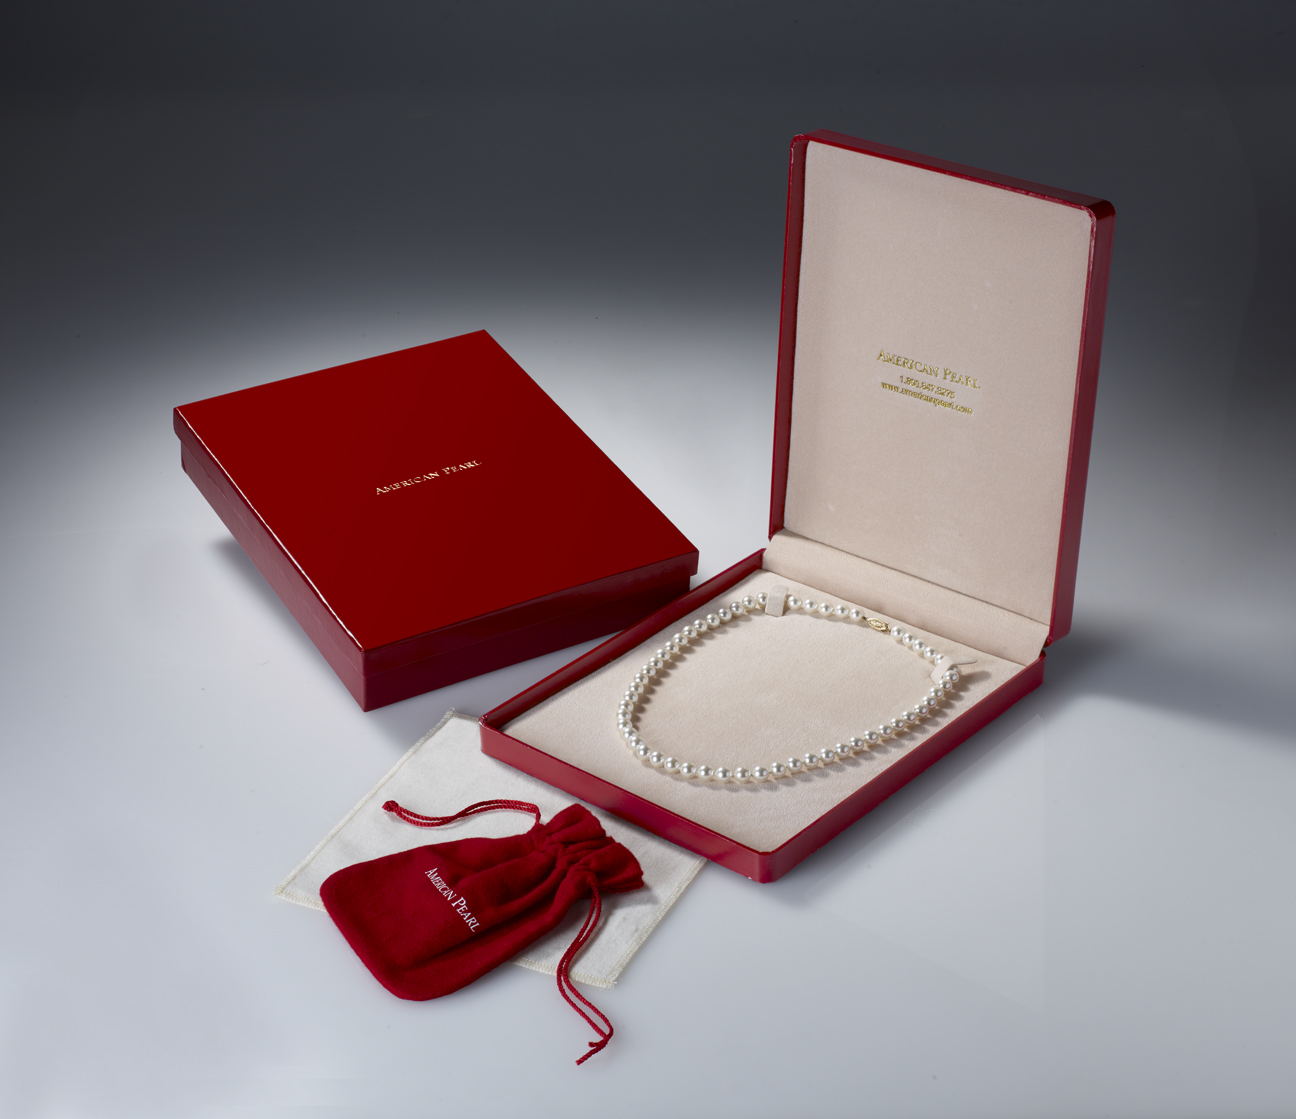 Pearl jewelry gift set